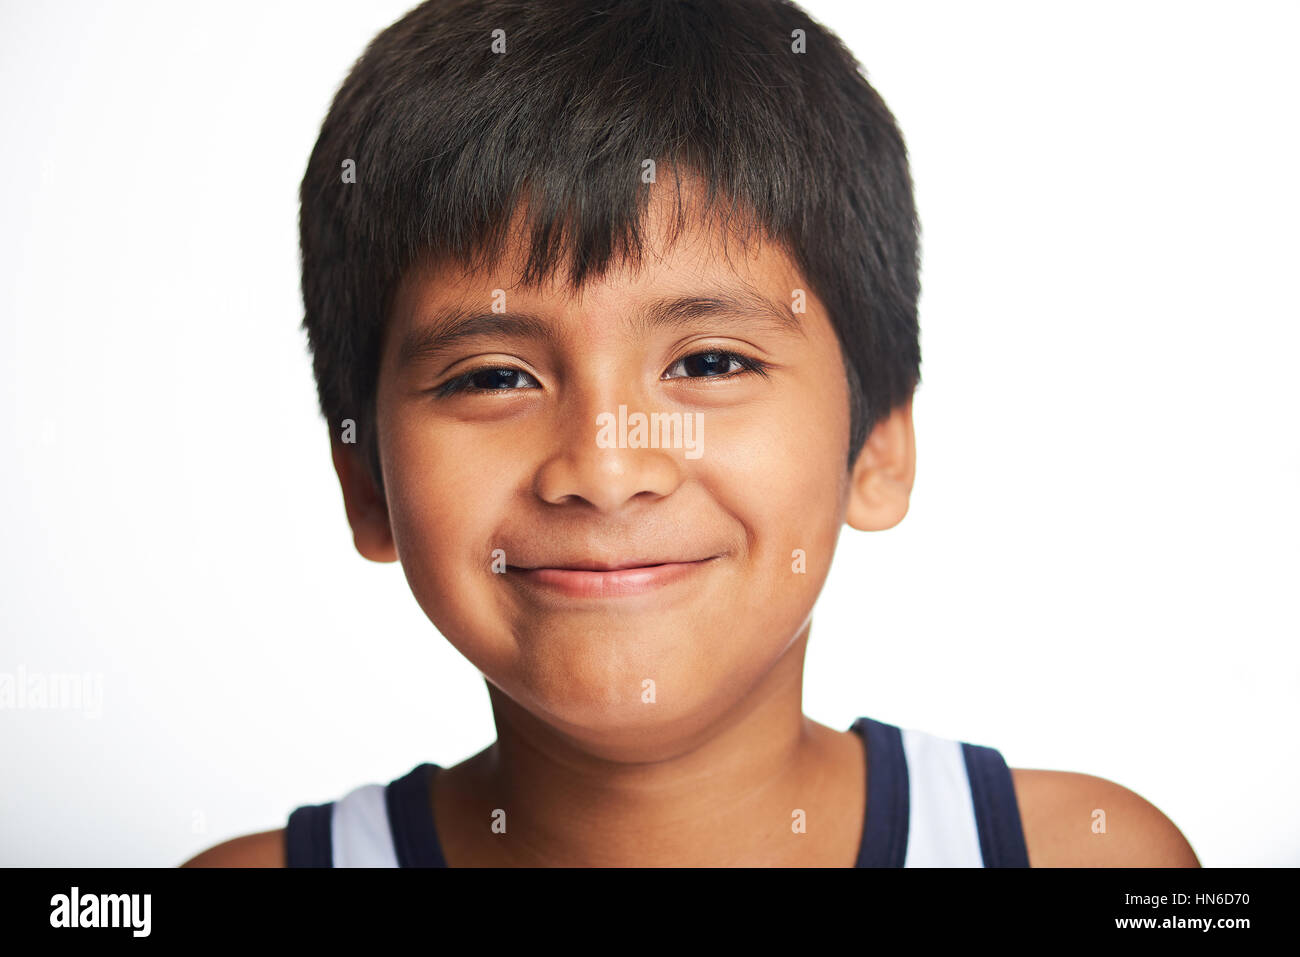 portrait of hispanic little boy with smile isolated on white Stock Photo